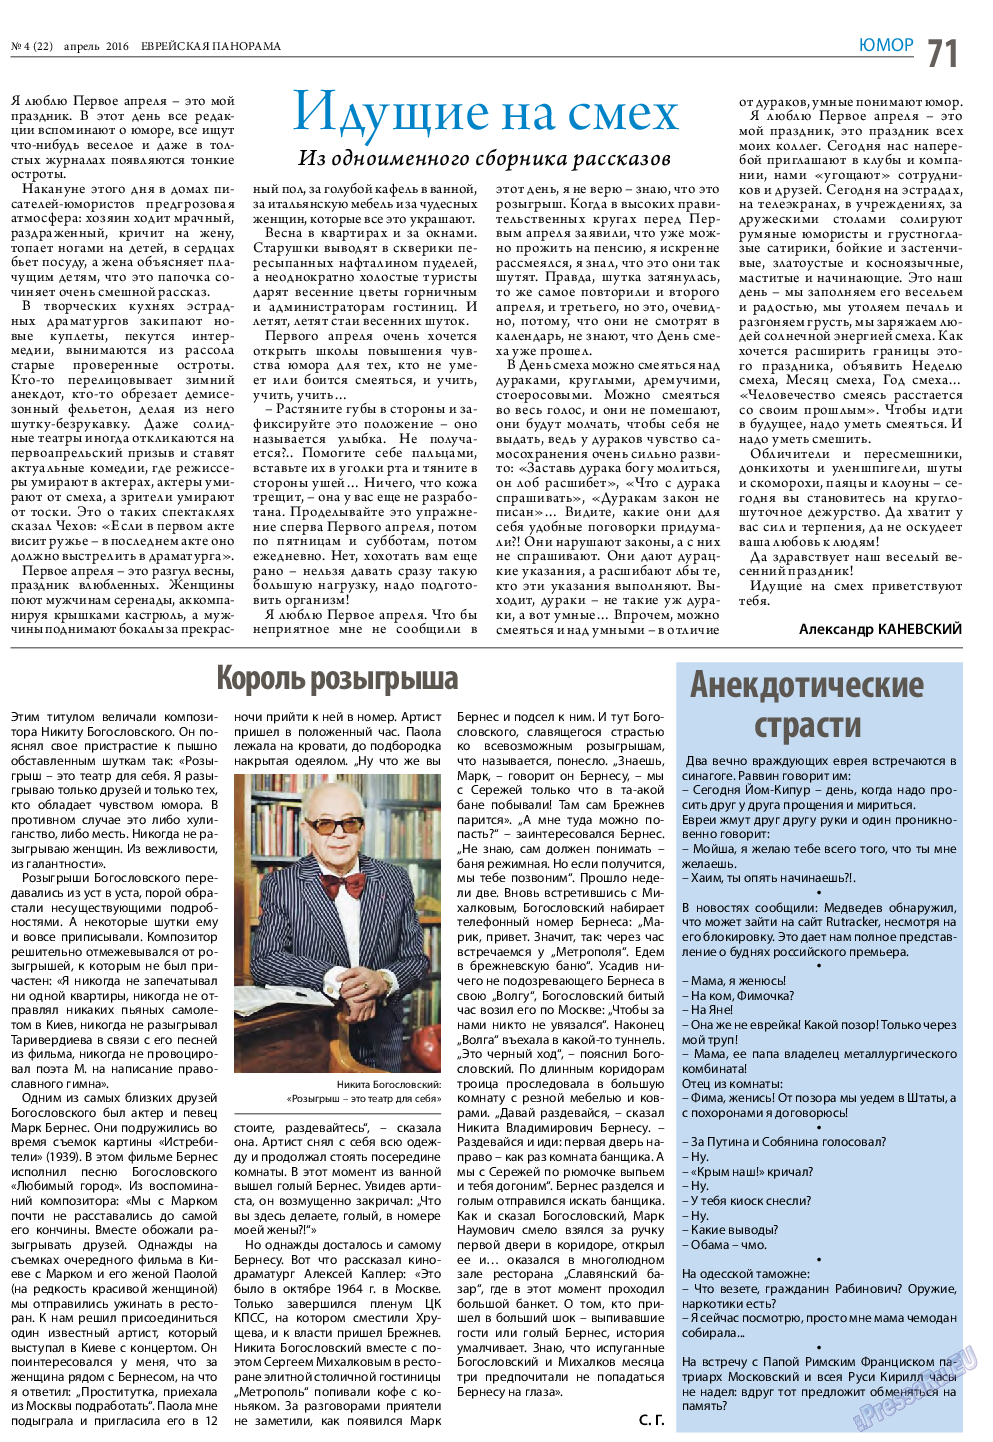 Еврейская панорама, газета. 2016 №4 стр.71